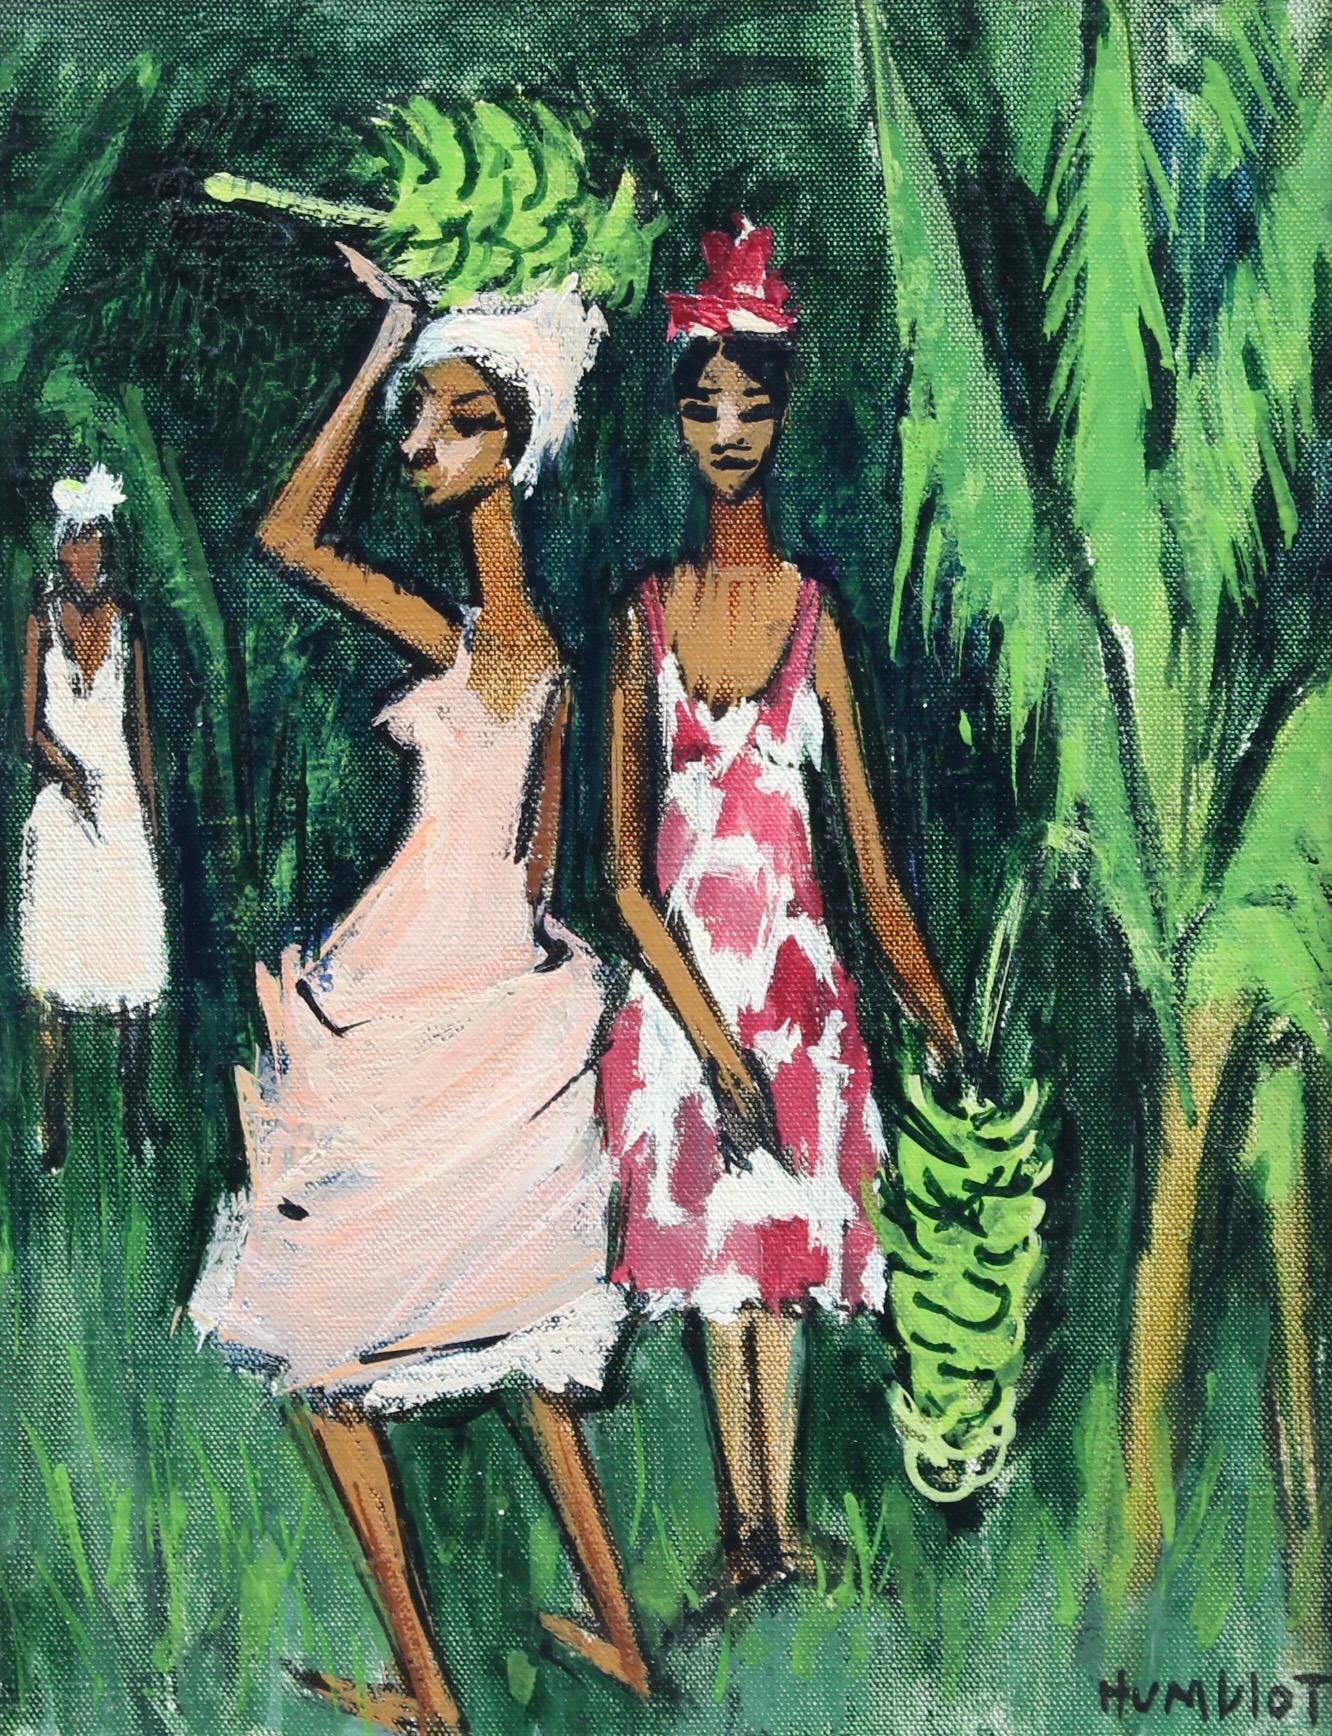 Figurative Painting Robert Humblot - The Banana Plantation Guadeloupe II